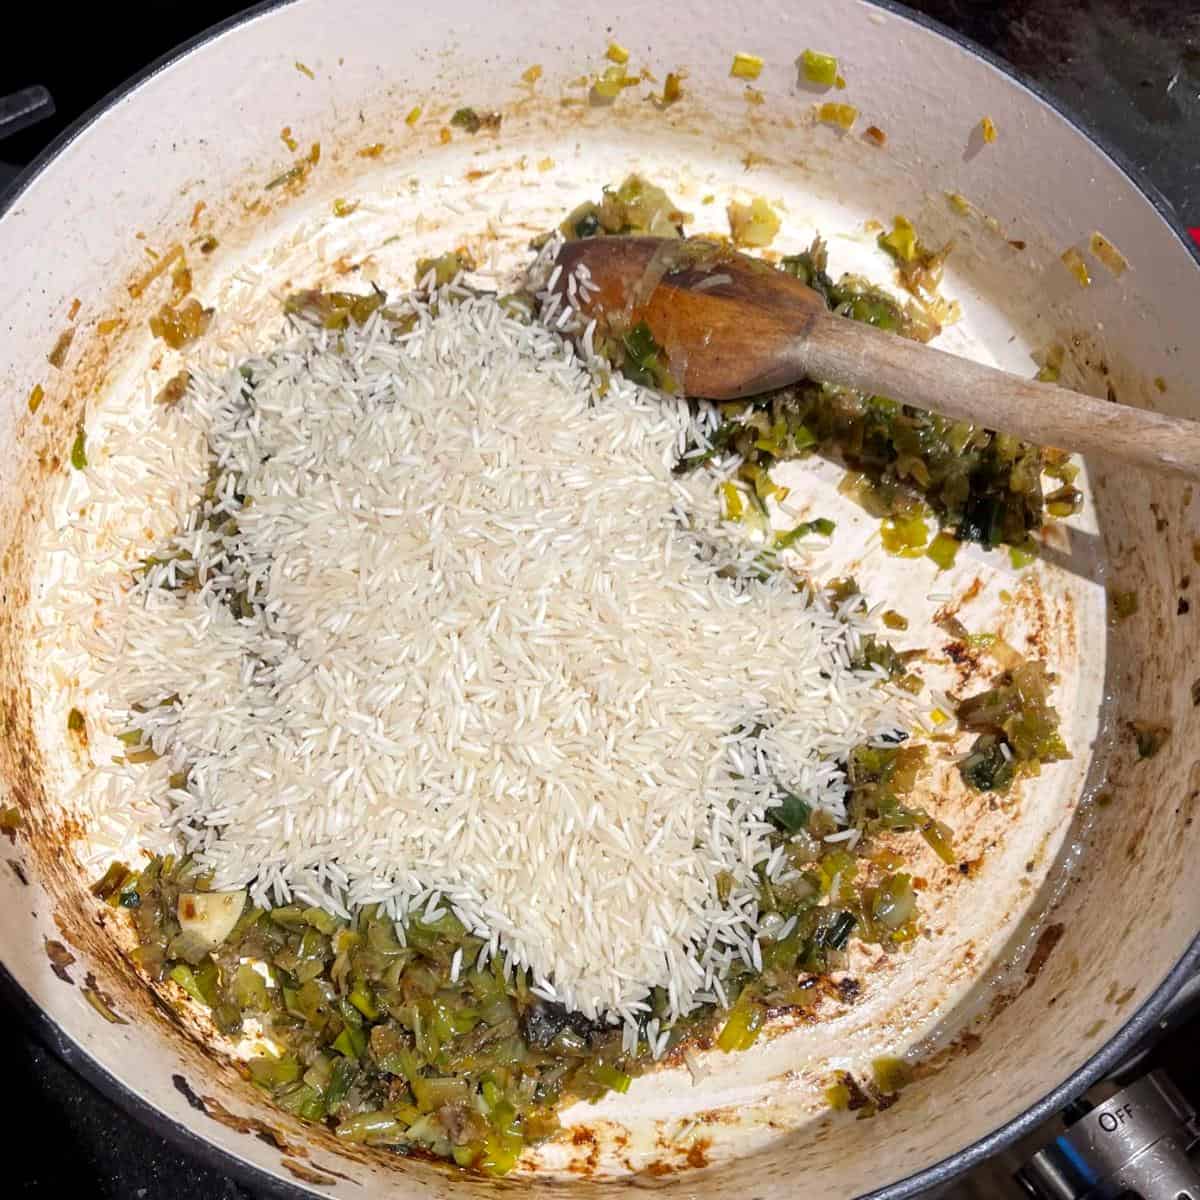 Rice added to leeks in saucepan.